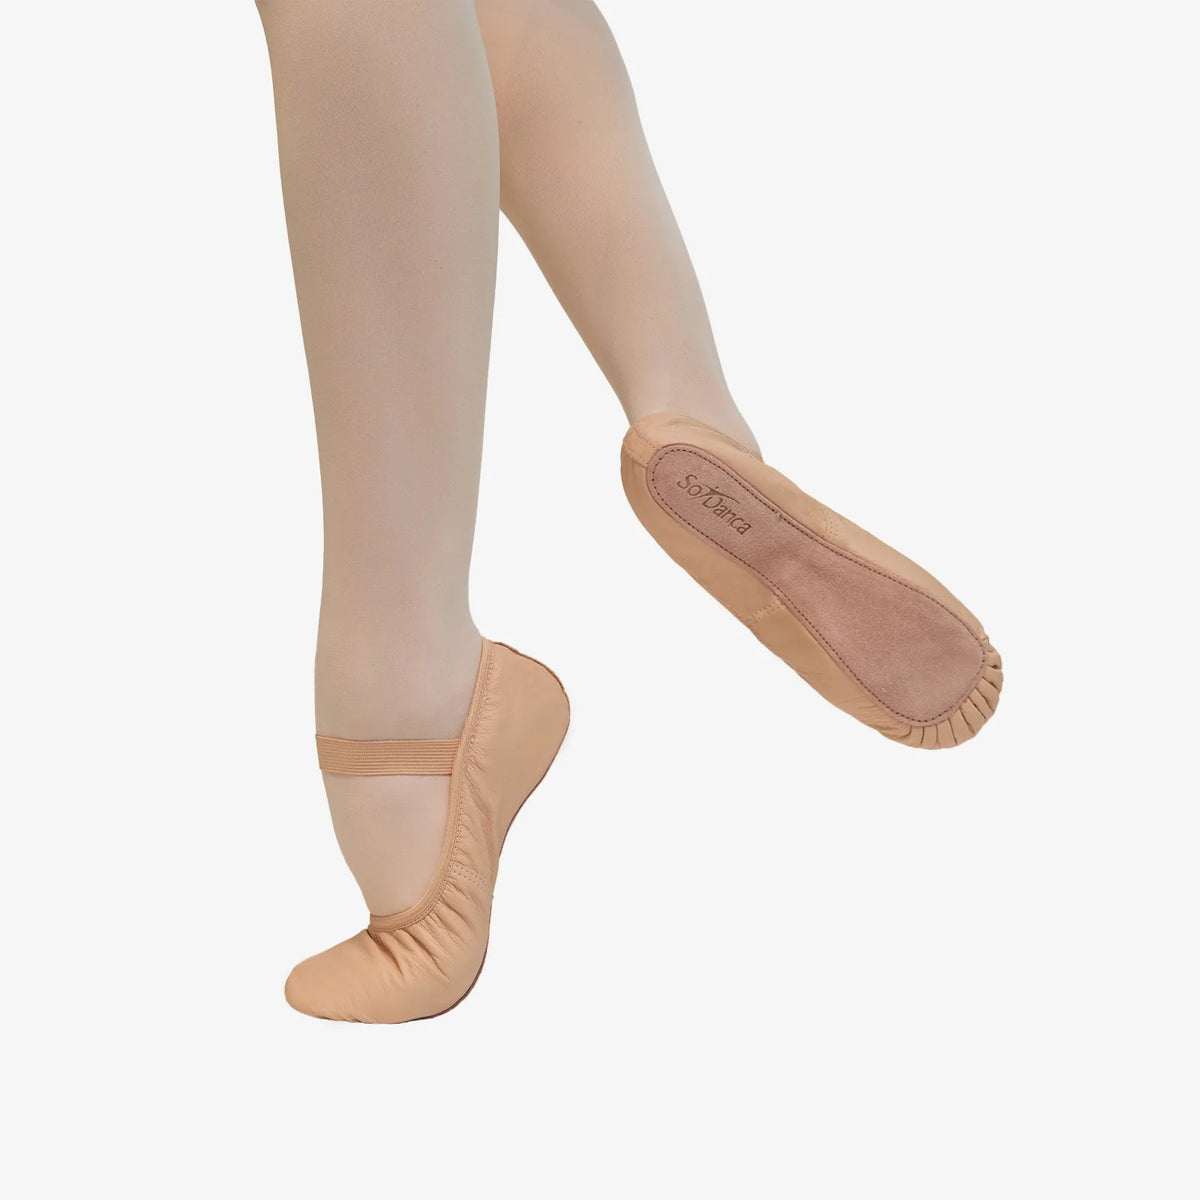 Brittany - Adult Premium Leather Full Sole Ballet Slipper